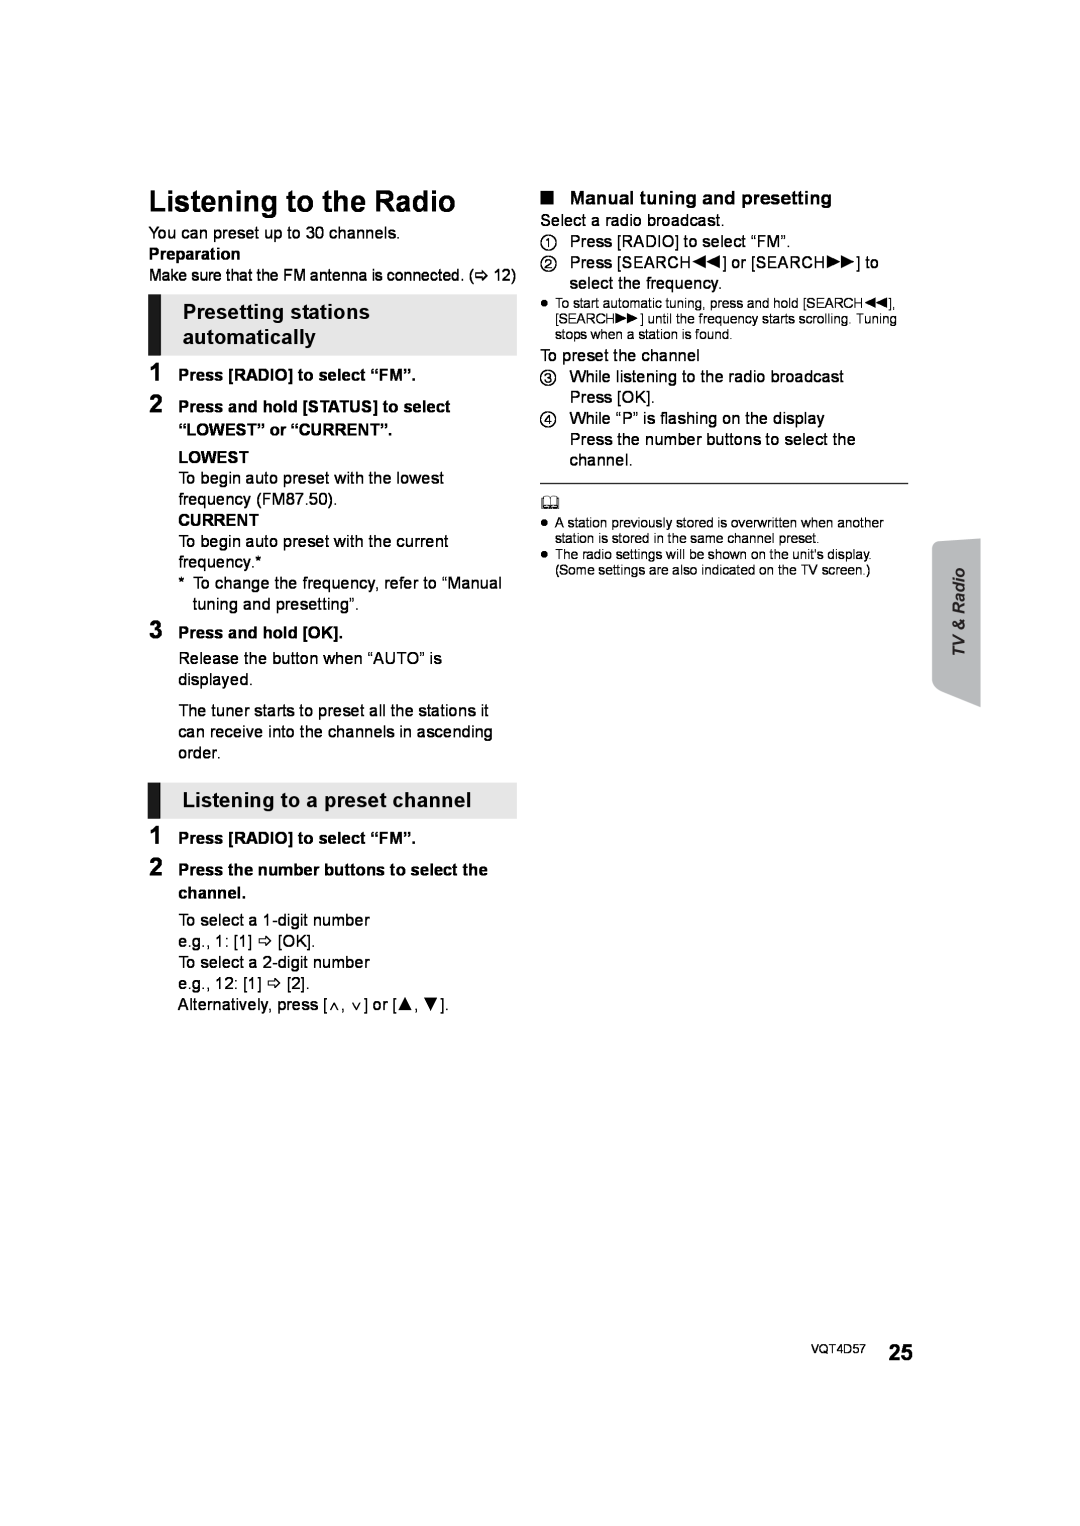 Panasonic SC-BTT190 manual ∫Manual tuning and presetting, Reference 